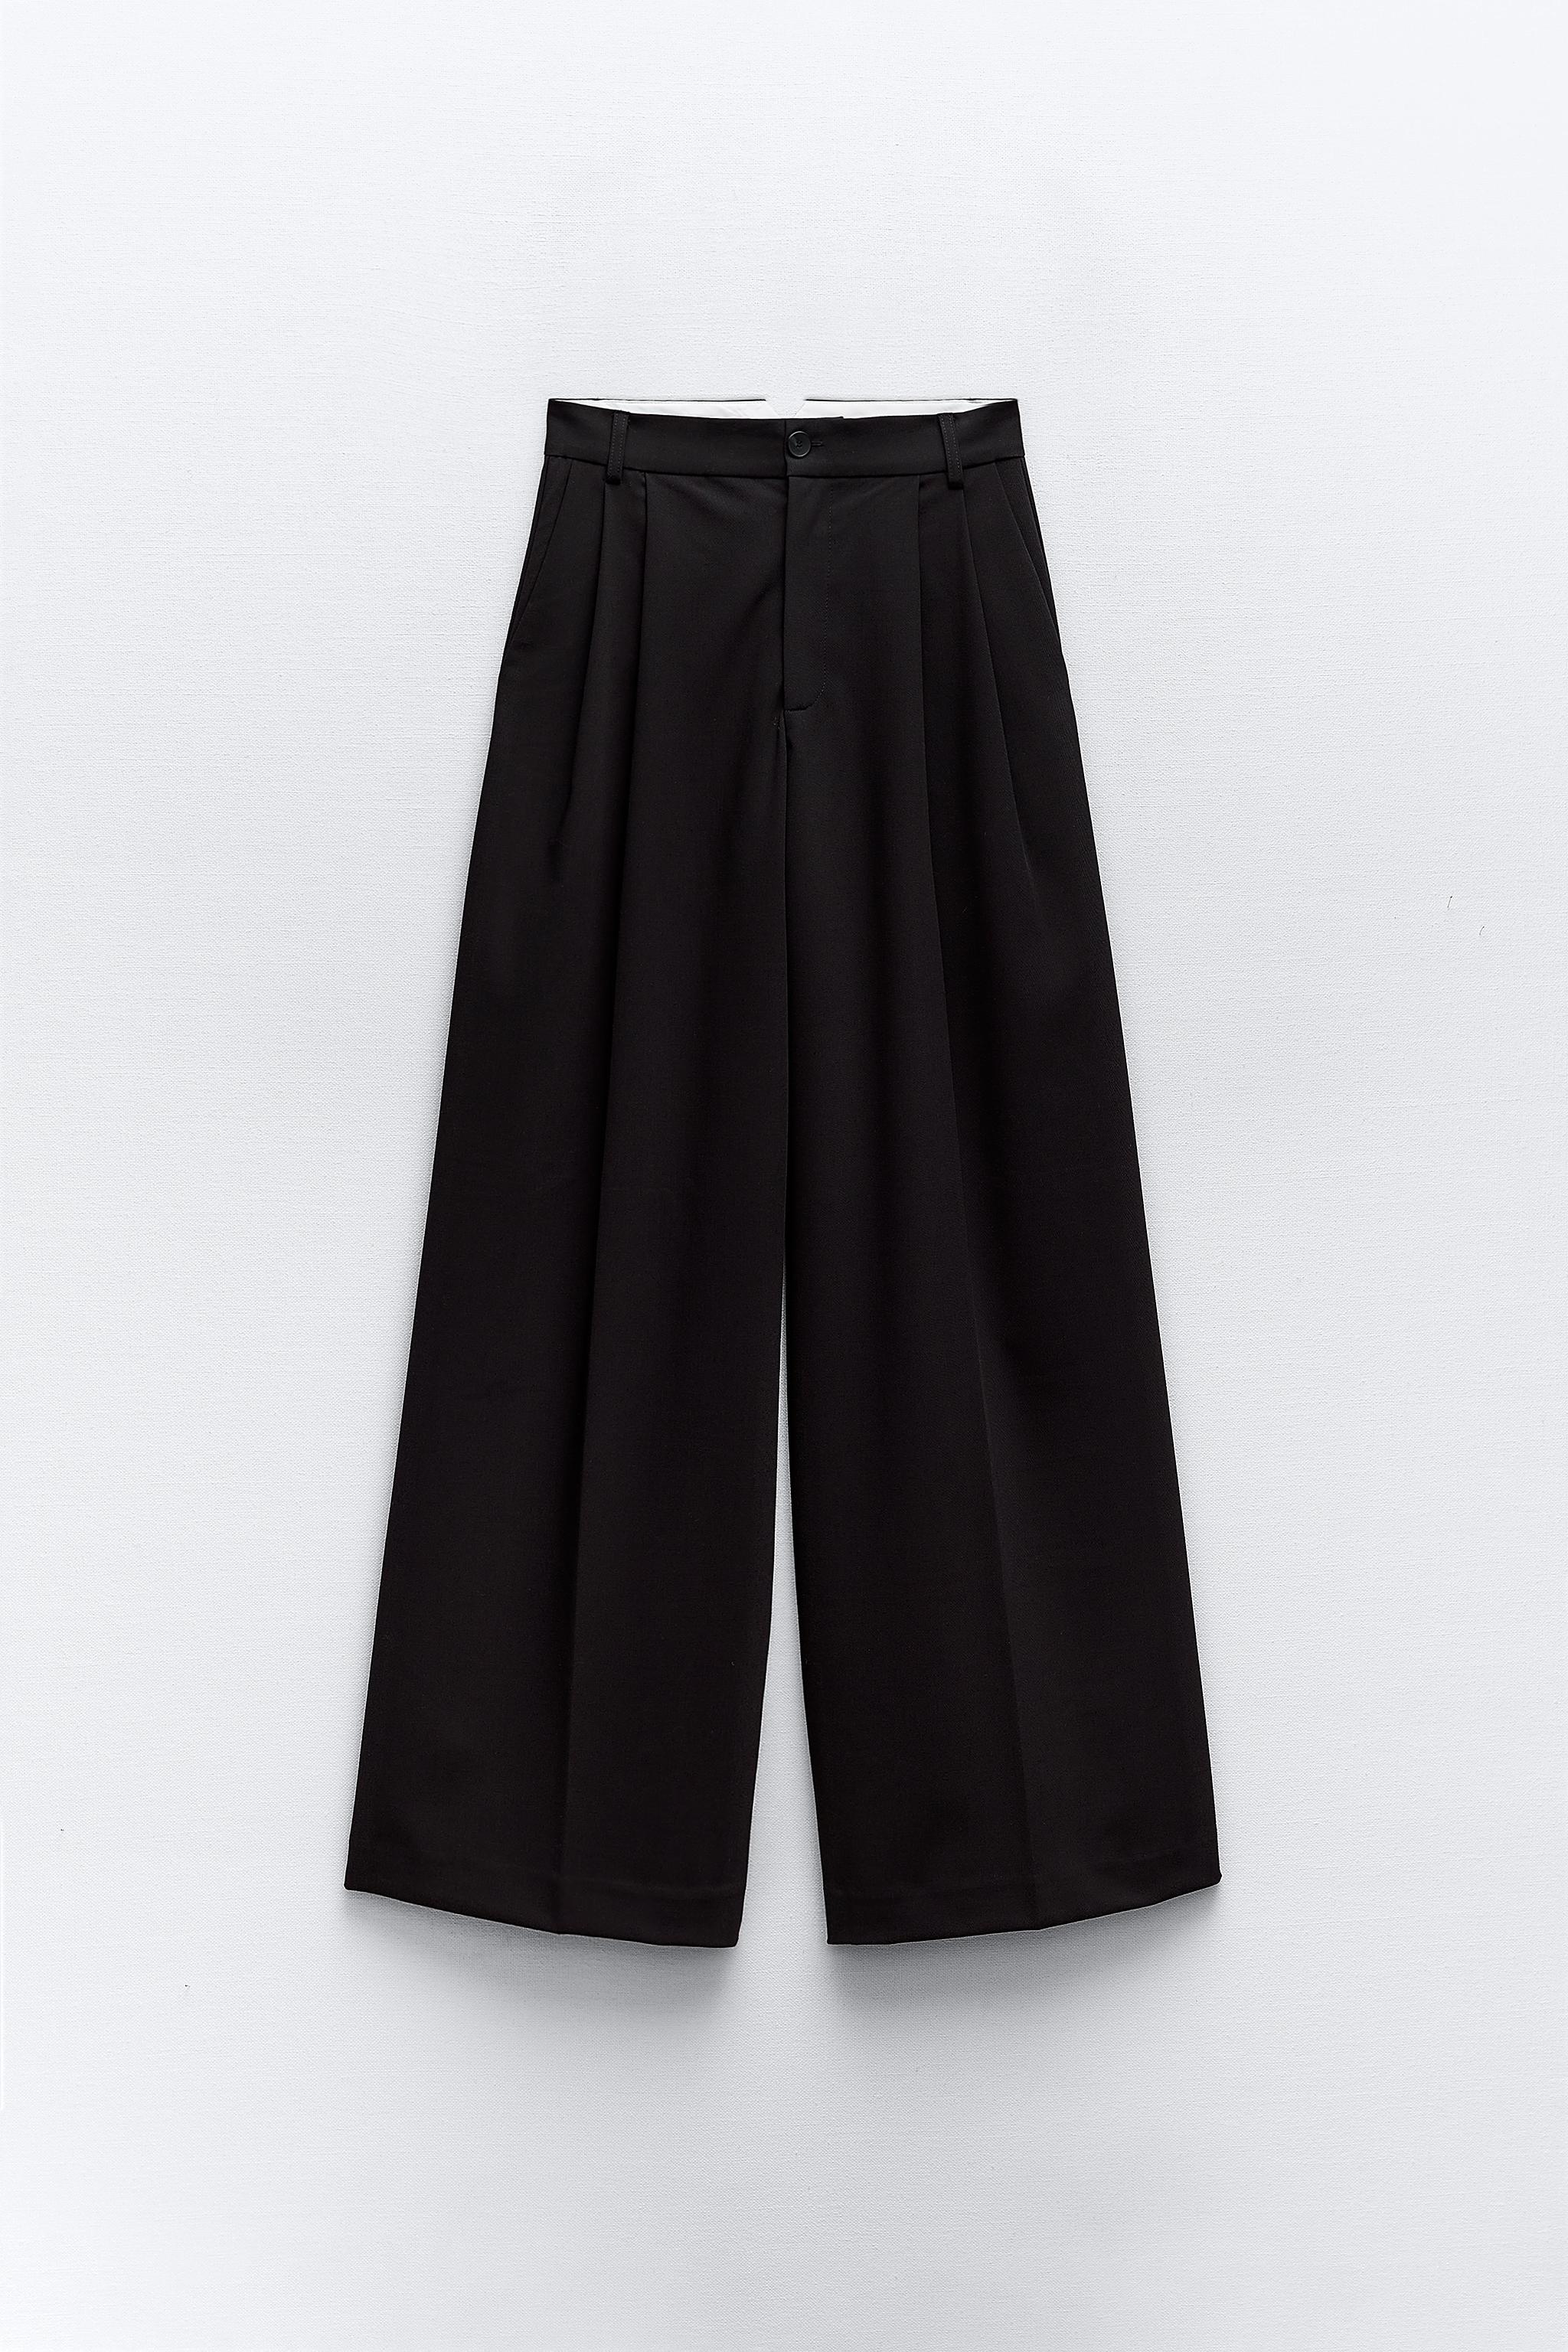 NEW ZARA MAN BLACK pleated SUIT PANTS Trousers 0706 477 800 Size USA 32  #3351 $49.90 - PicClick